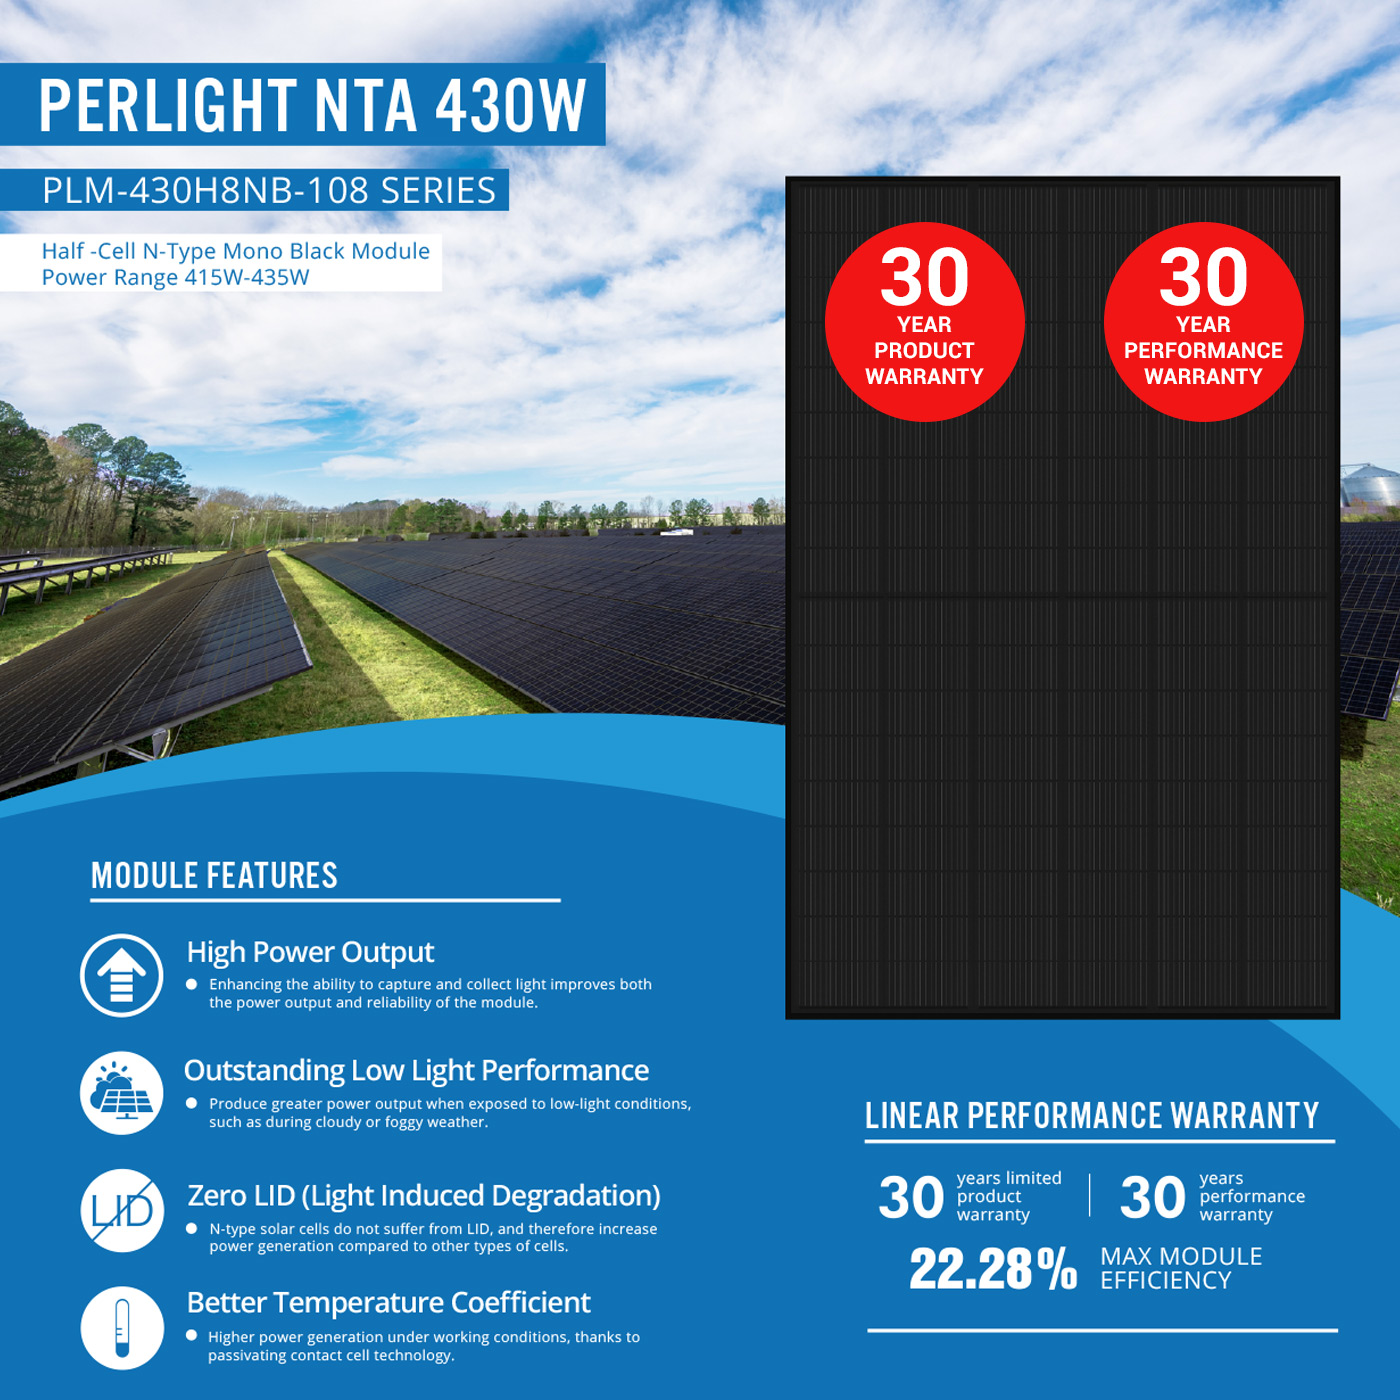 Perlight NTA 430W Solar Panels